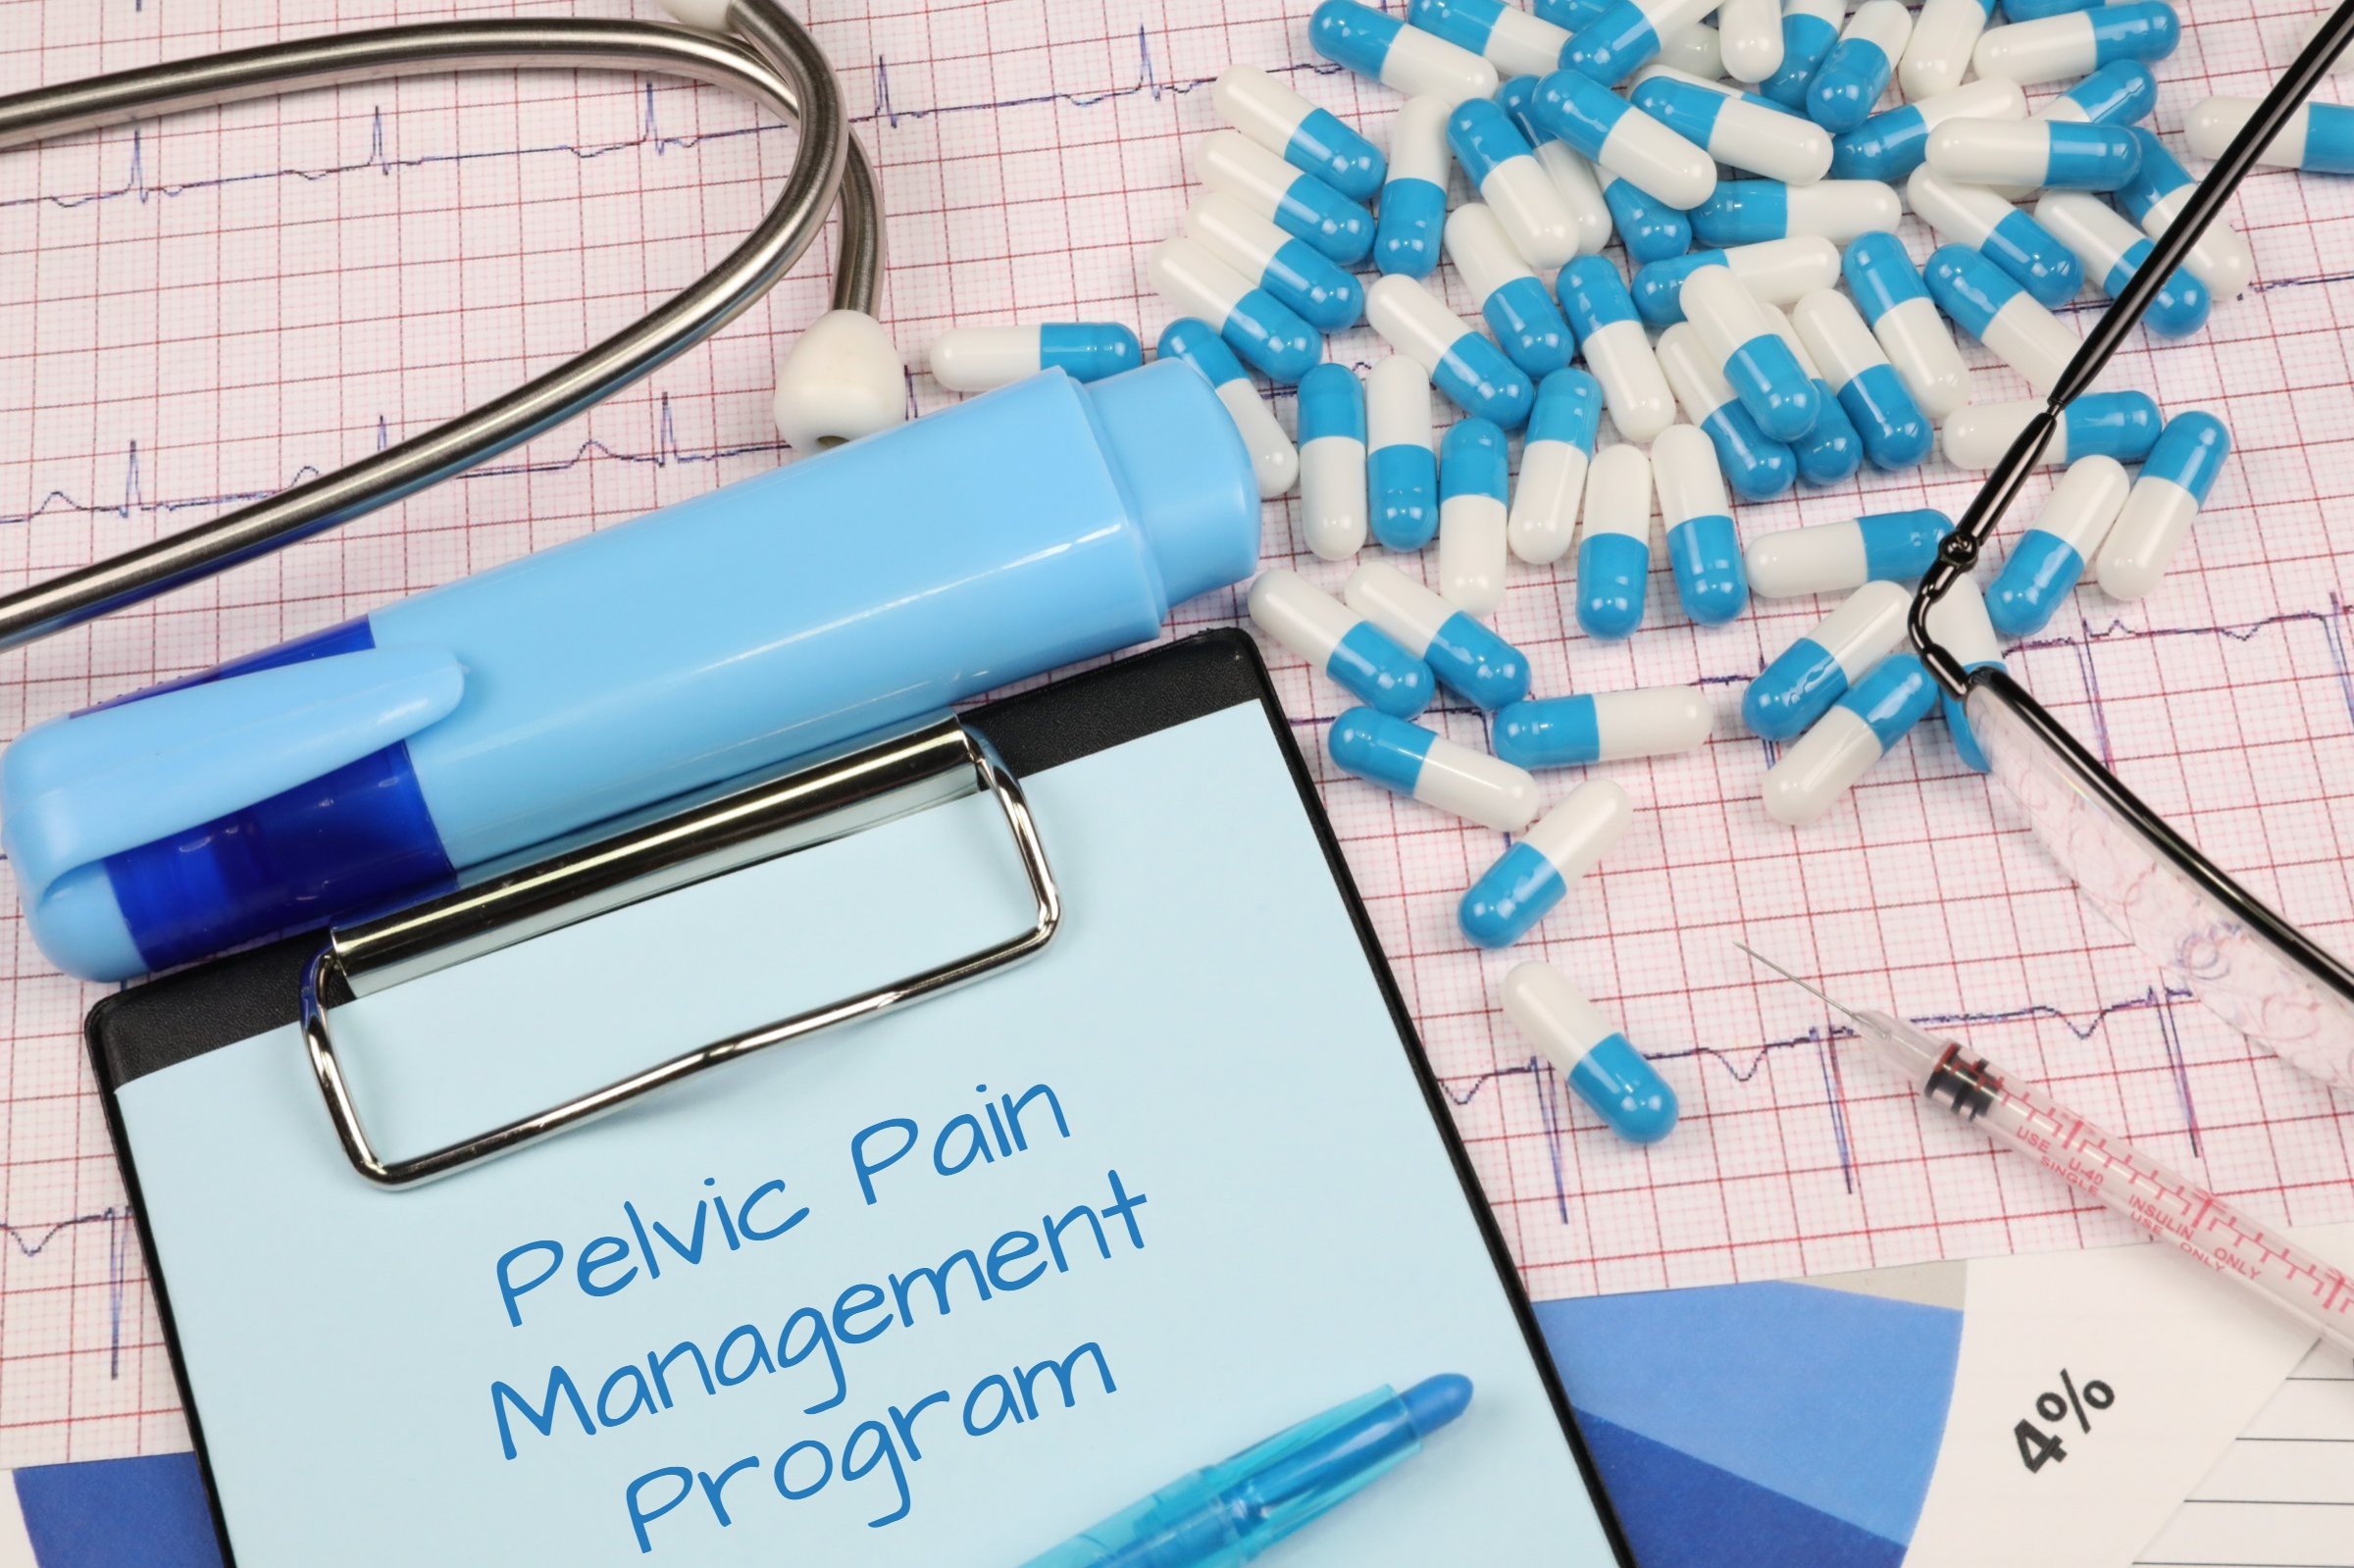 pelvic pain management program